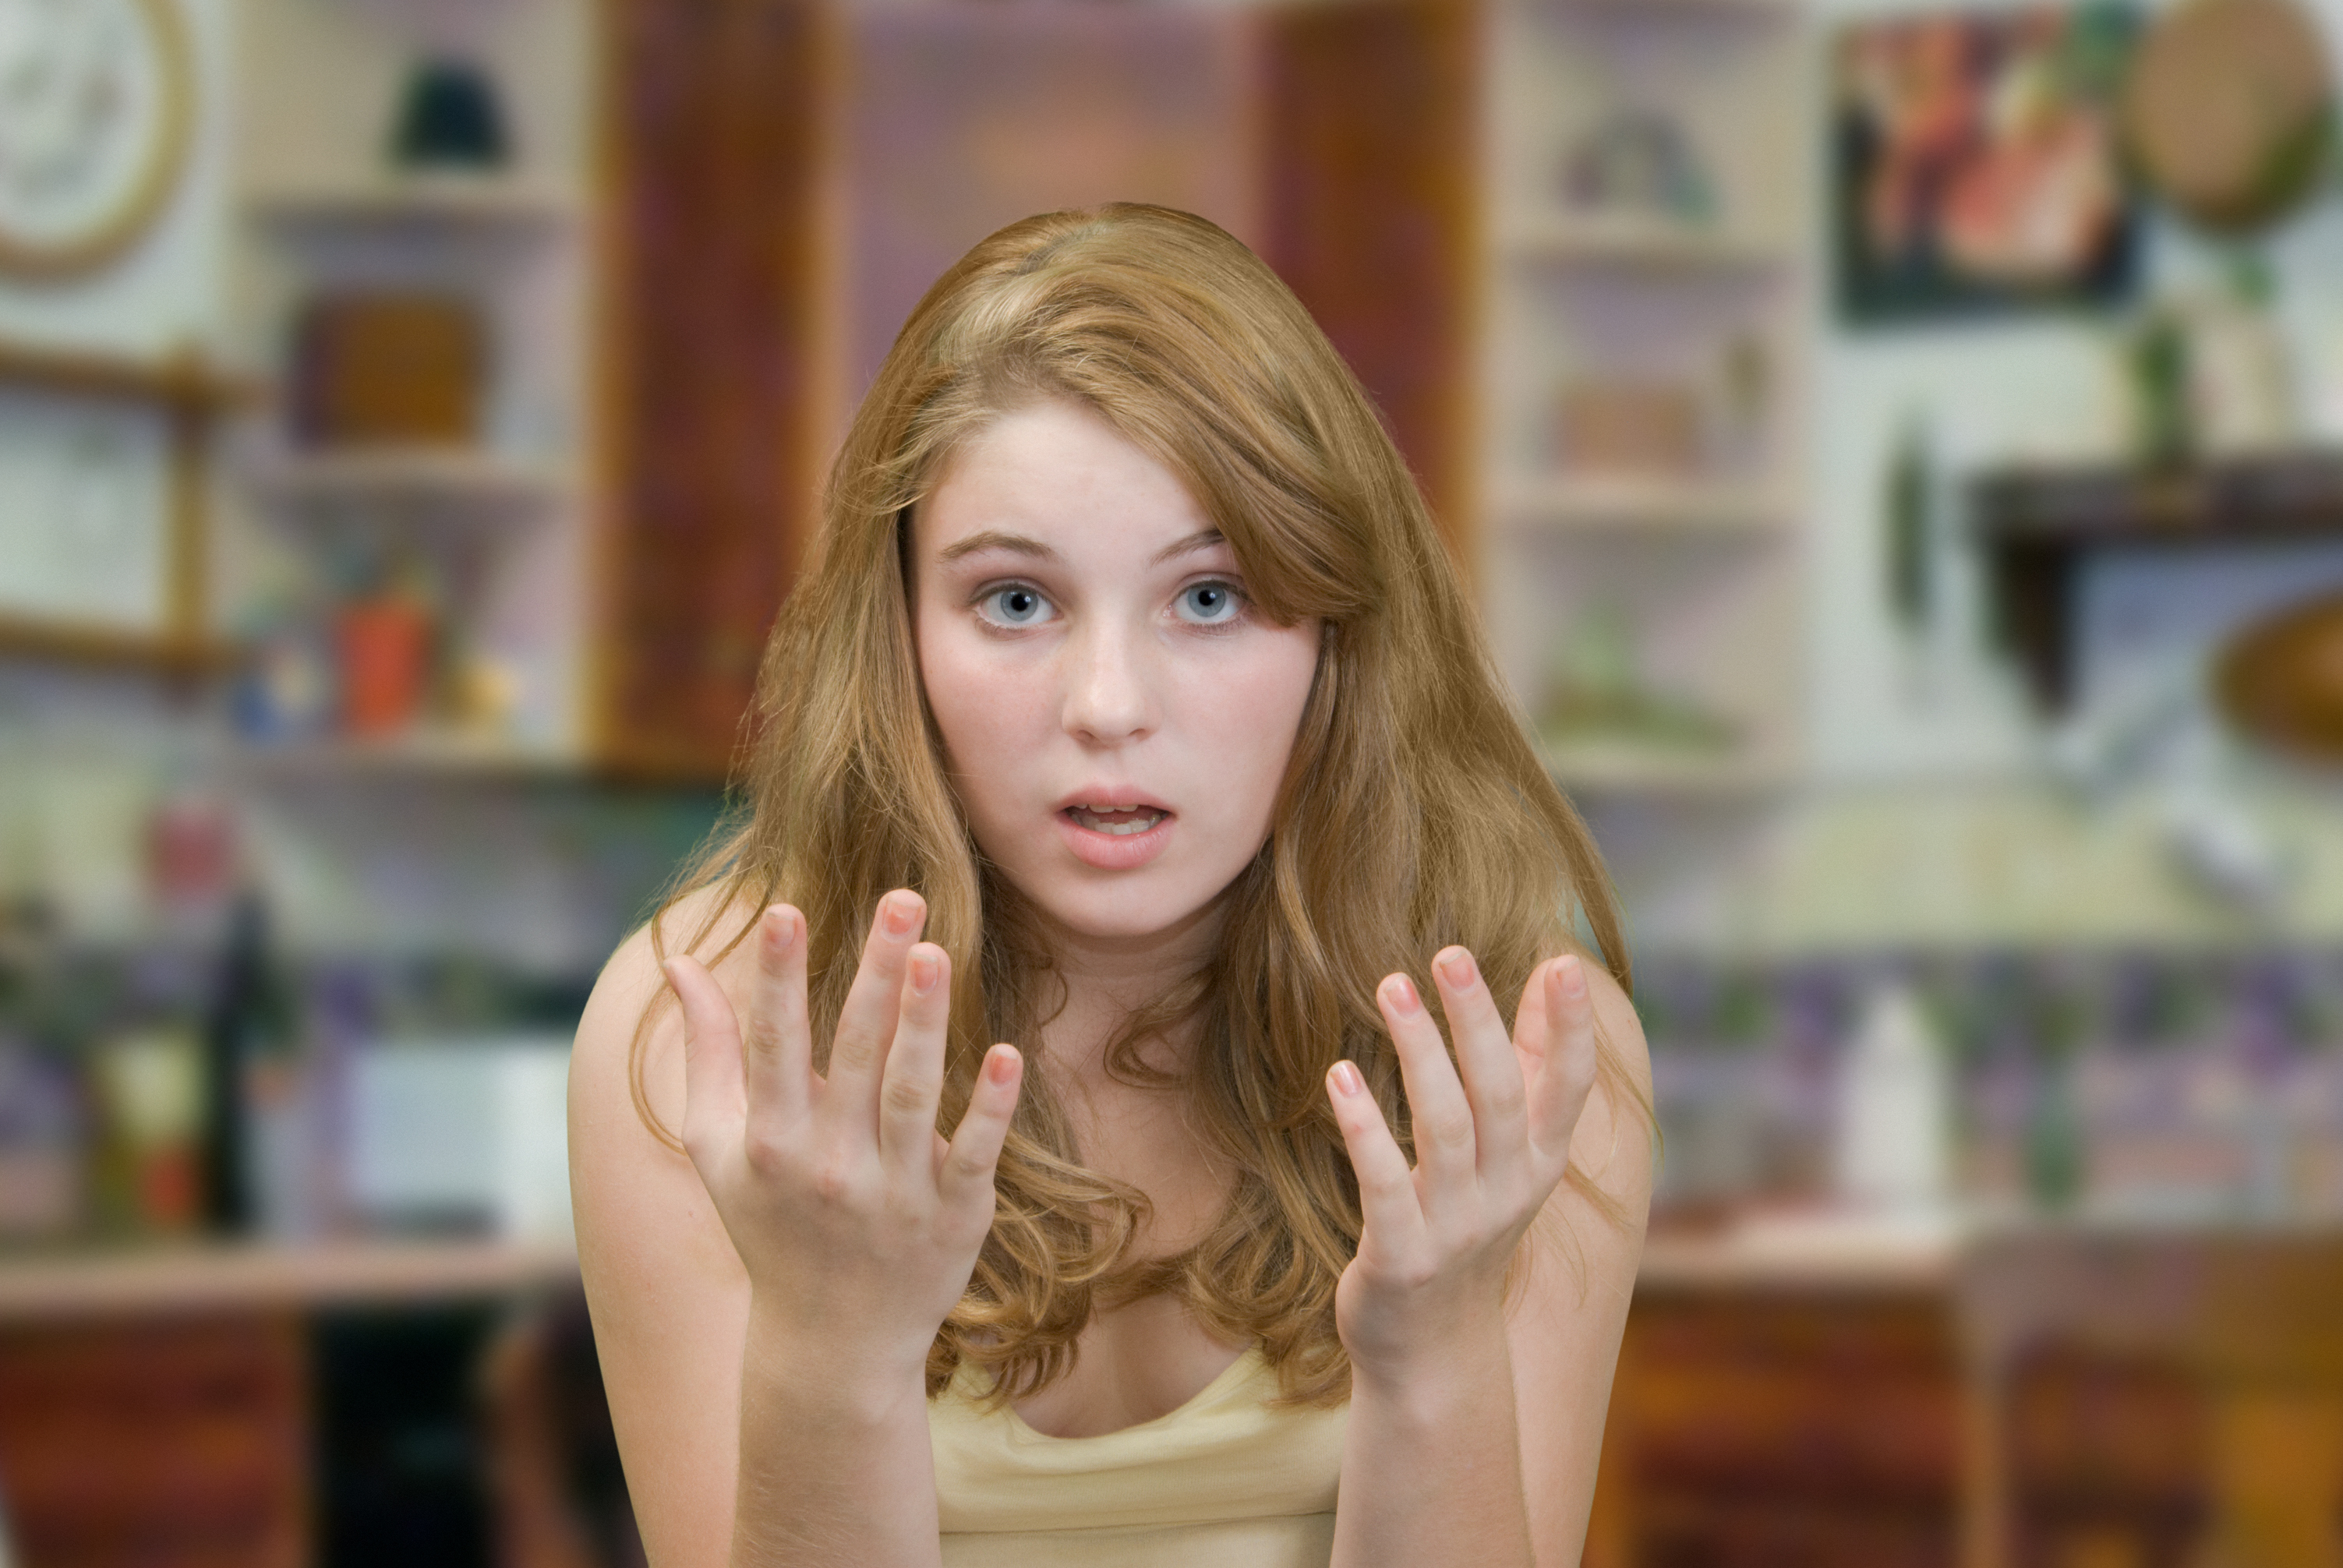 Girl trying to explain | Source: Shutterstock